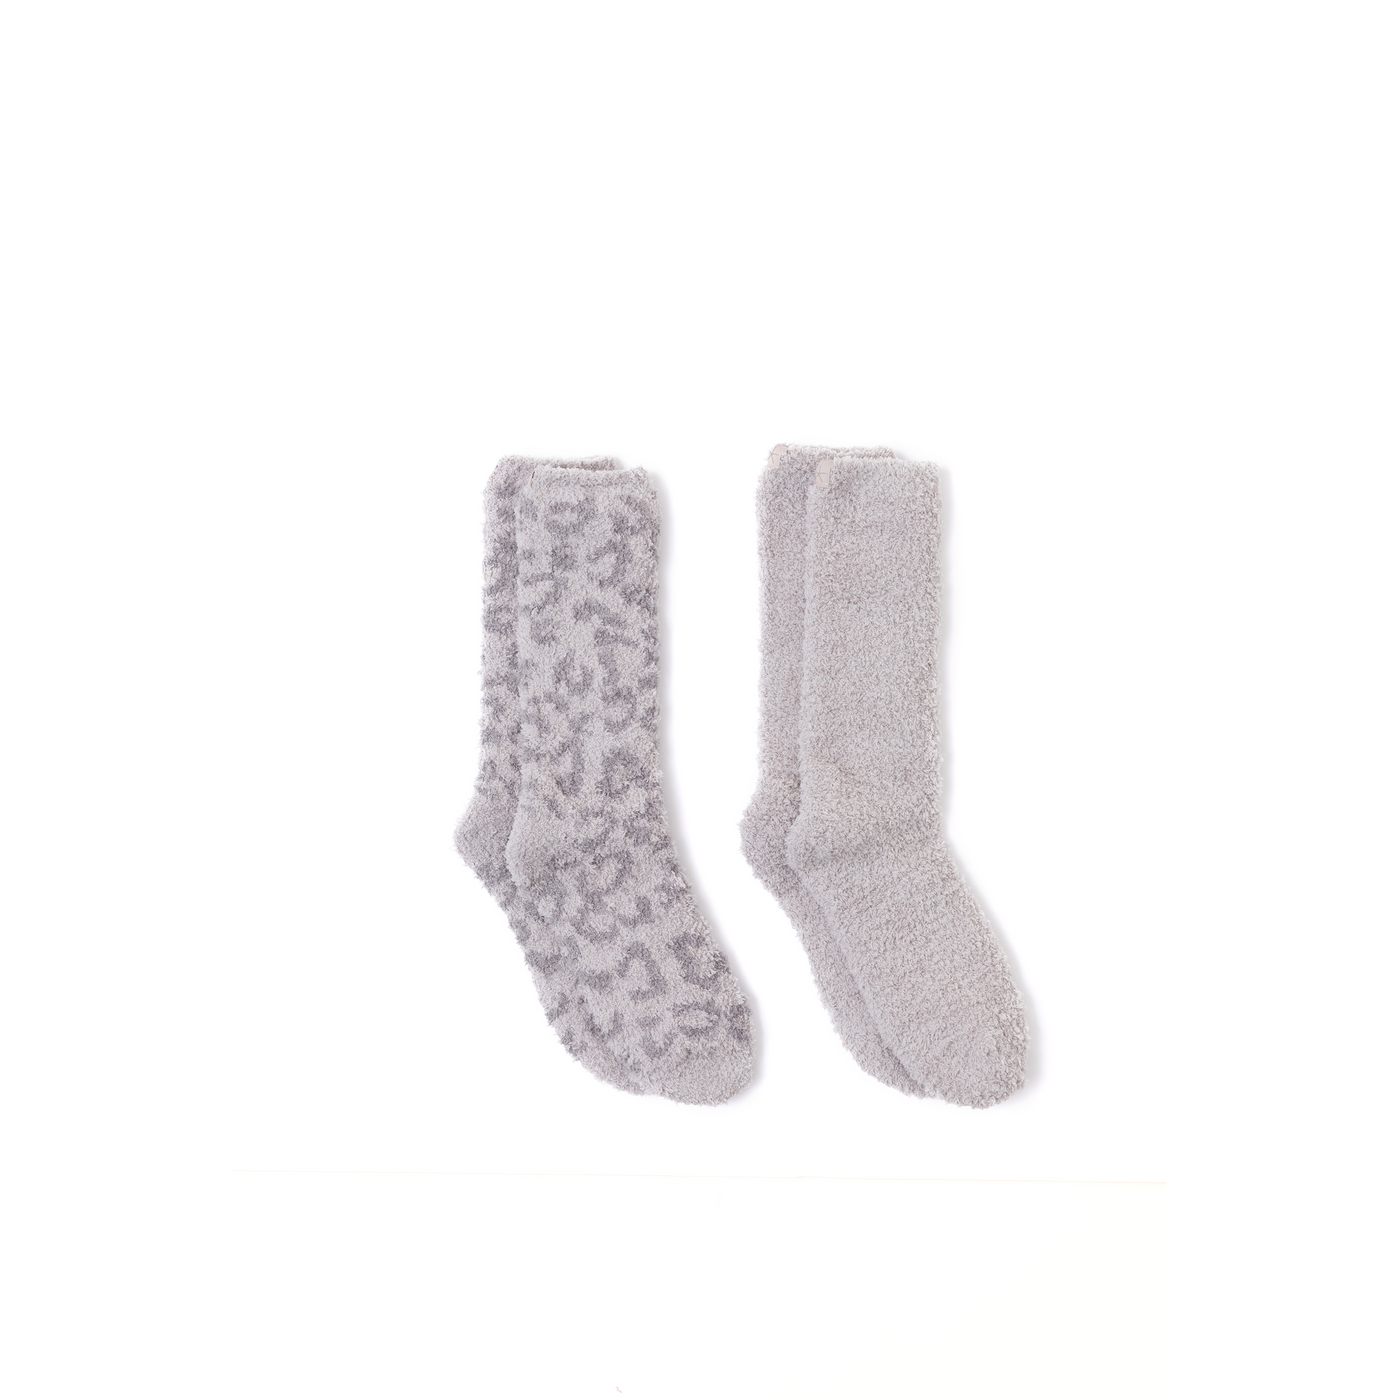 CozyChic® Women's Barefoot in the Wild® 2 Pair Sock Set